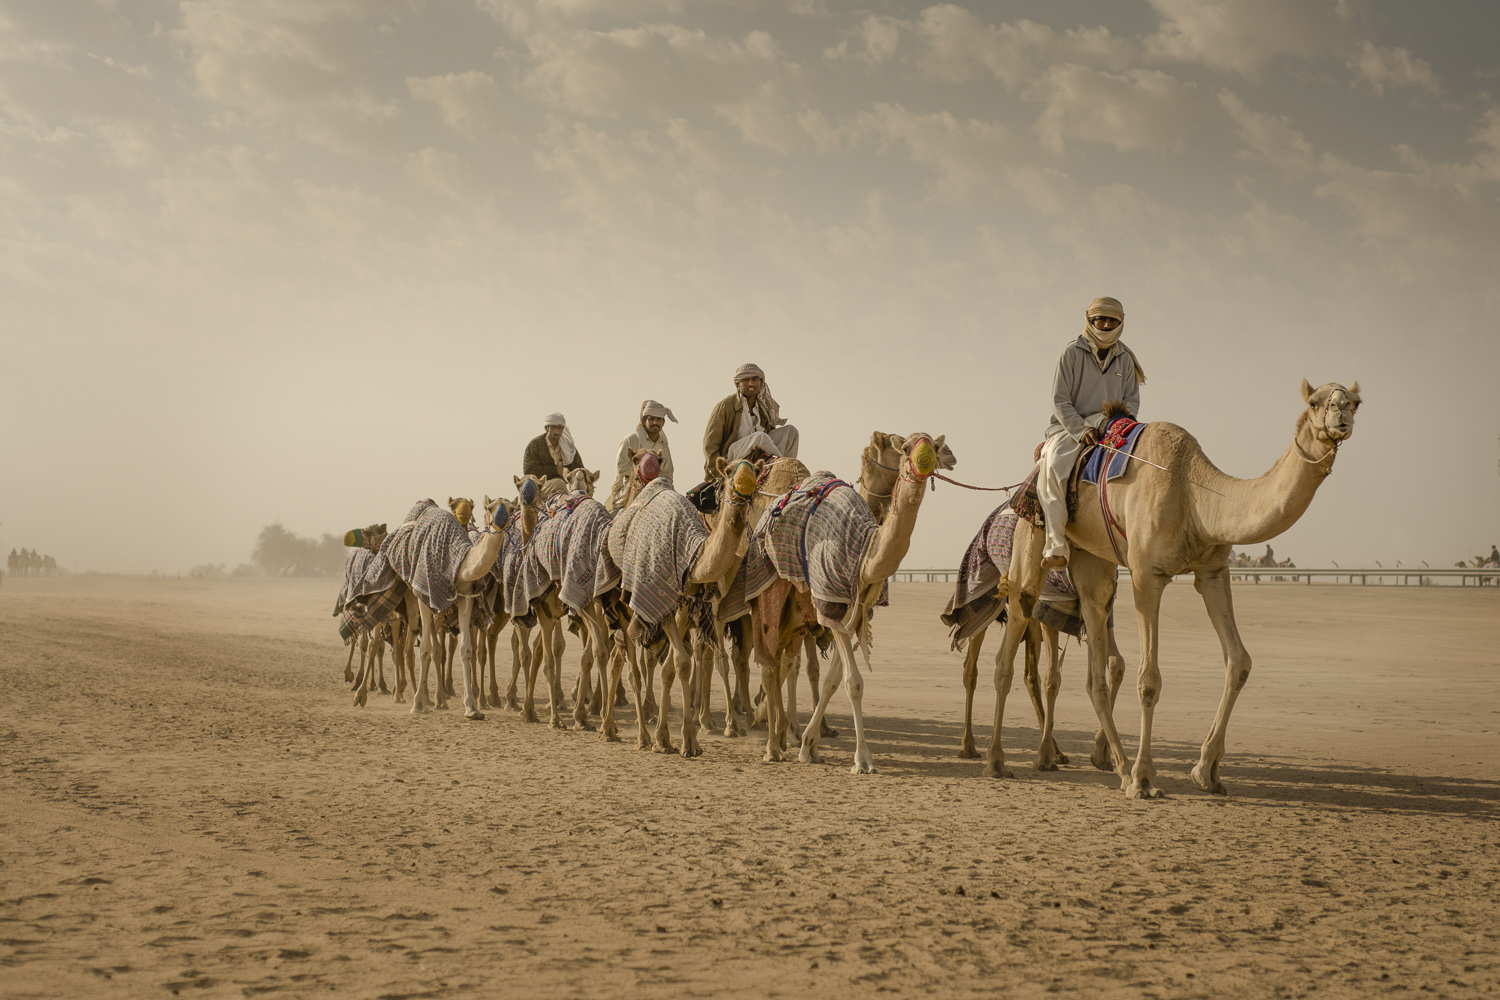 jo-kearney-video-photos-caravan-caravanphotography-travel-portraits-prints-for-sale-dubai-camels-camel-herder-dubai-UAE-desert-racing-camels-caravan.jpg